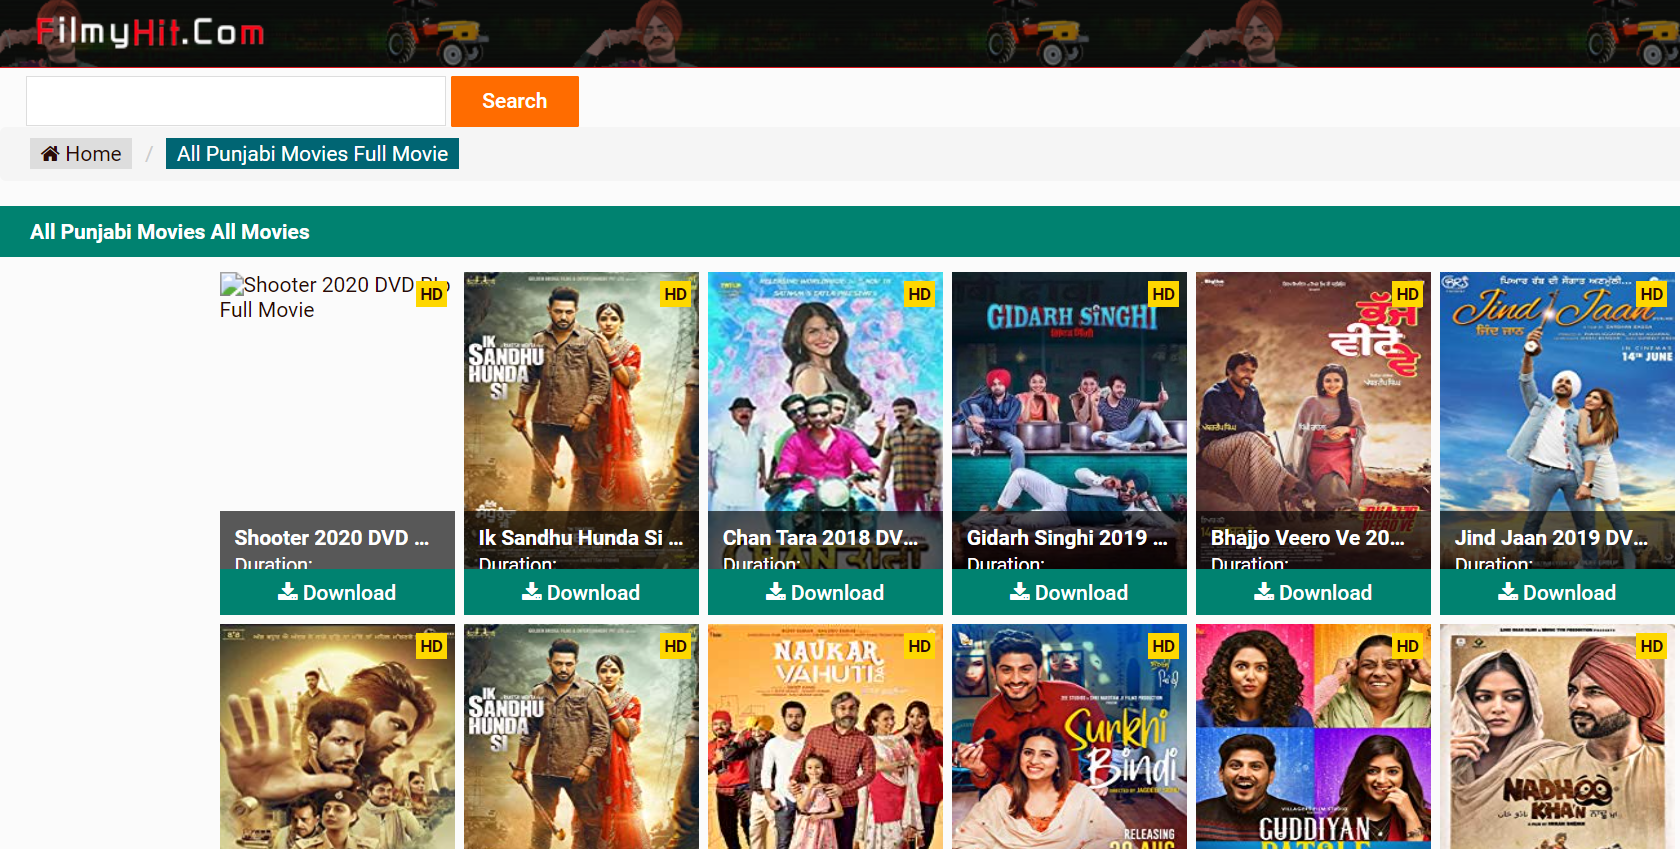 Filmyhit.com Punjabi Movies: How To Download Movies?